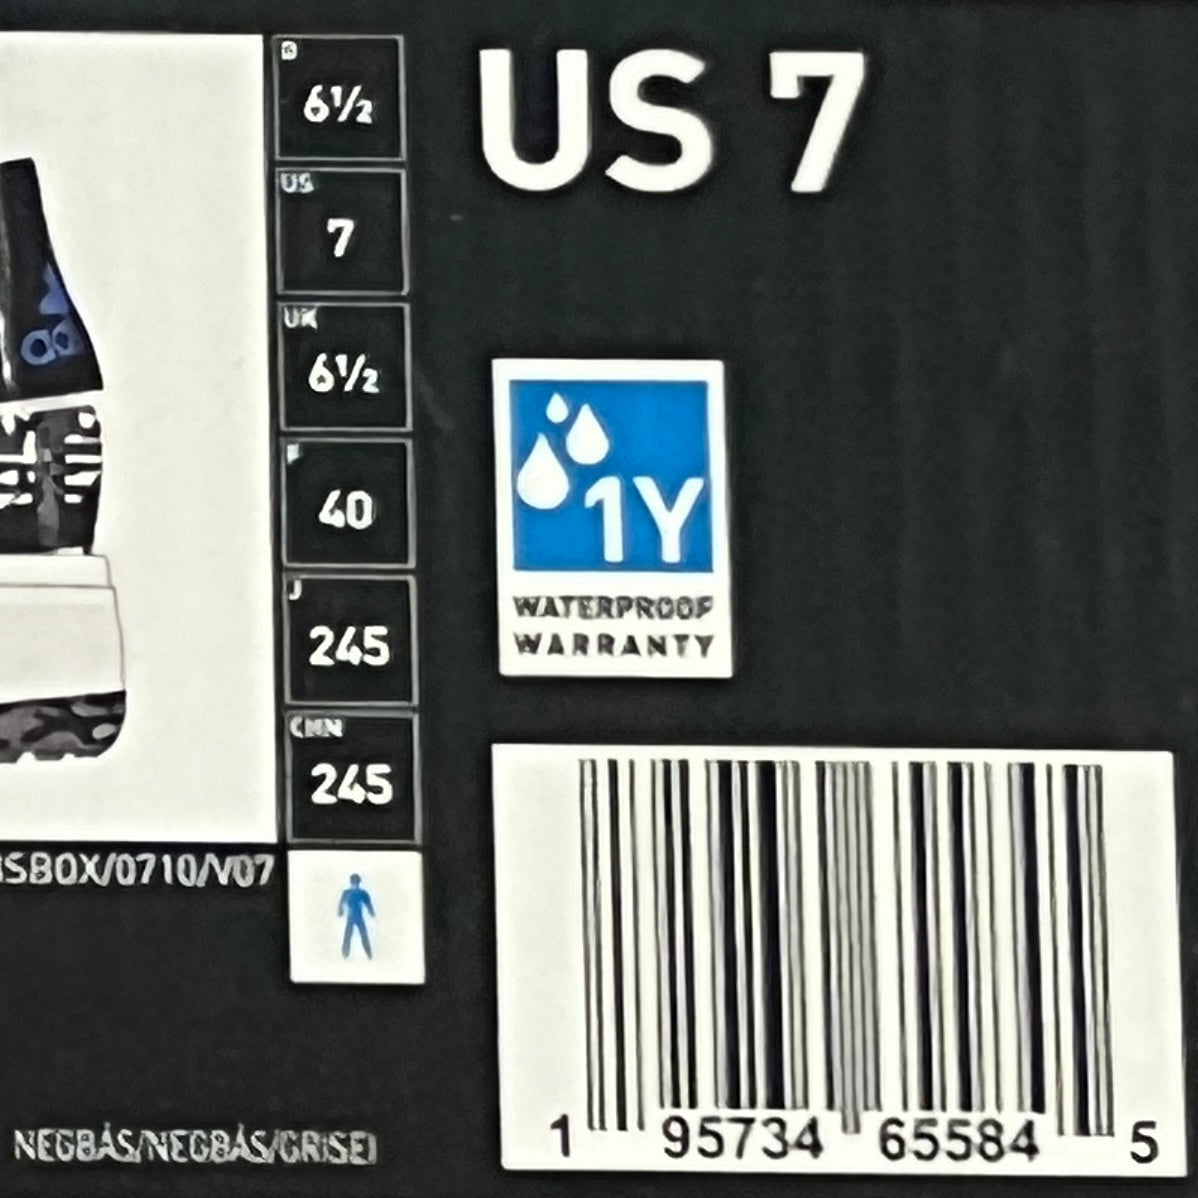 ADIDAS Golf Shoes S2G SL BOA Spikeless Men's Sz 7 Black / Grey GV9789 (New)